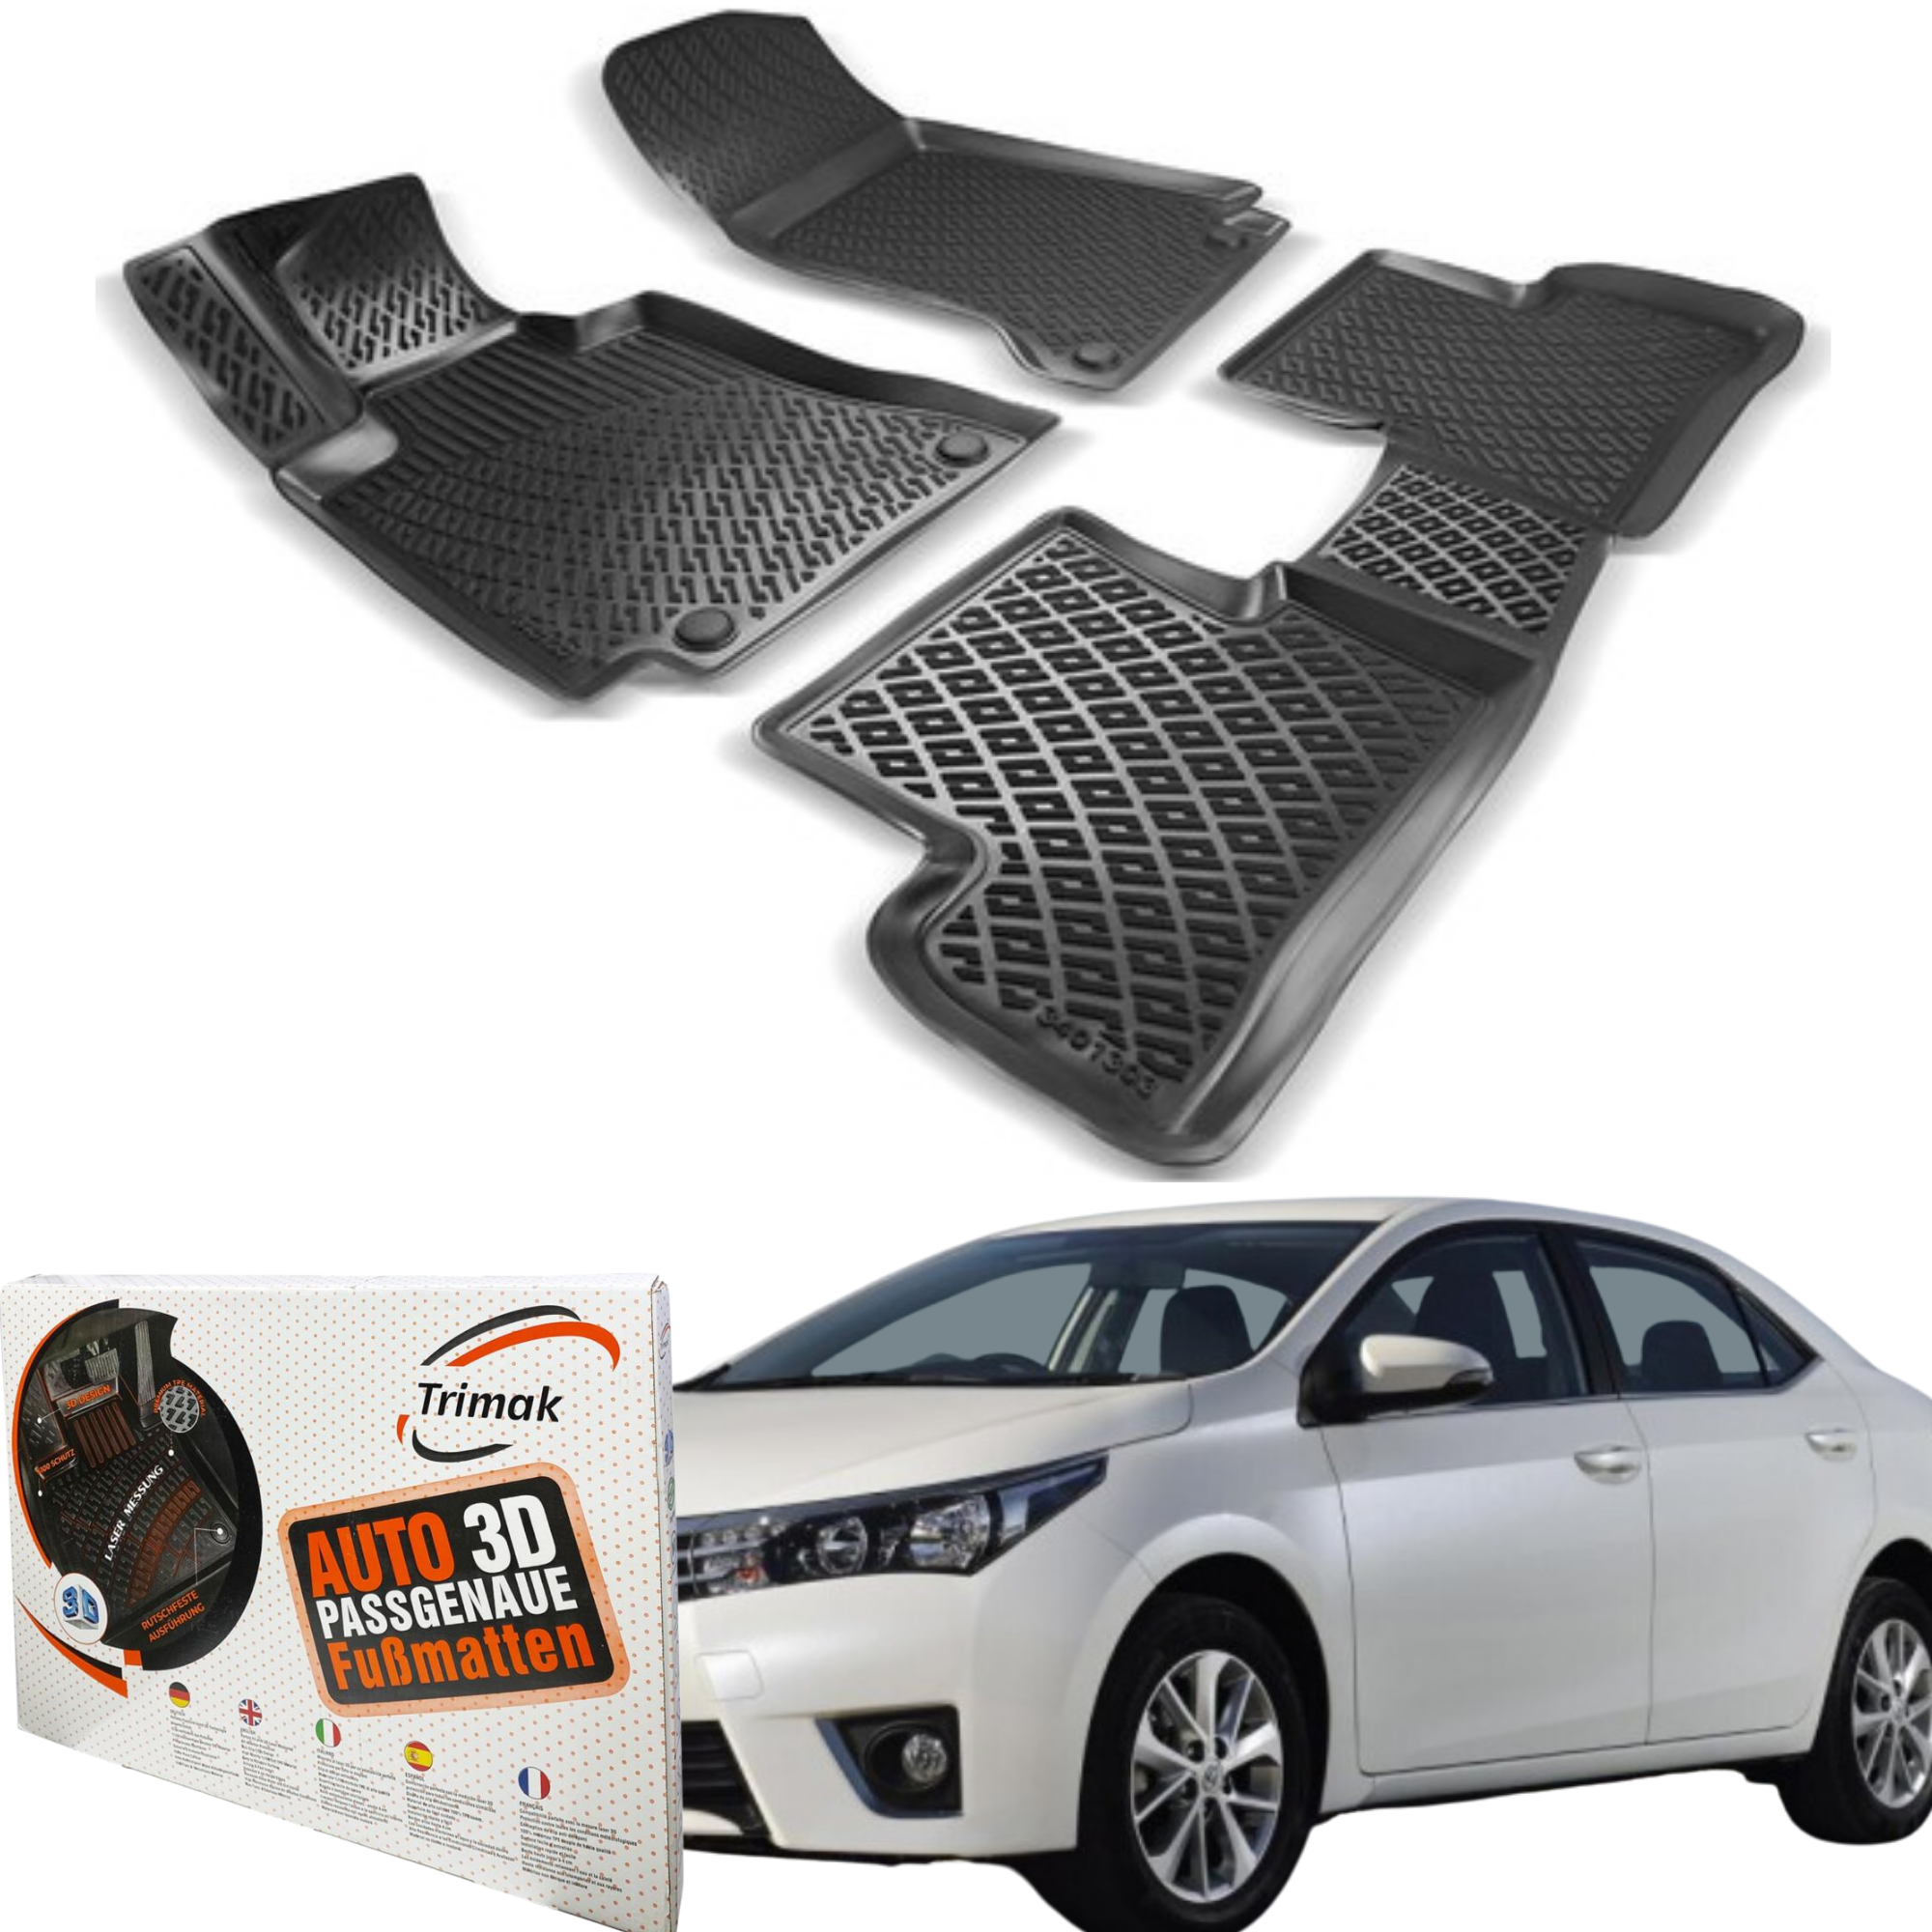 Trimak Autofußmatten kompatibel mit Toyota Corolla 2013-2018 (E160) Auto Allwetter Gummimatten